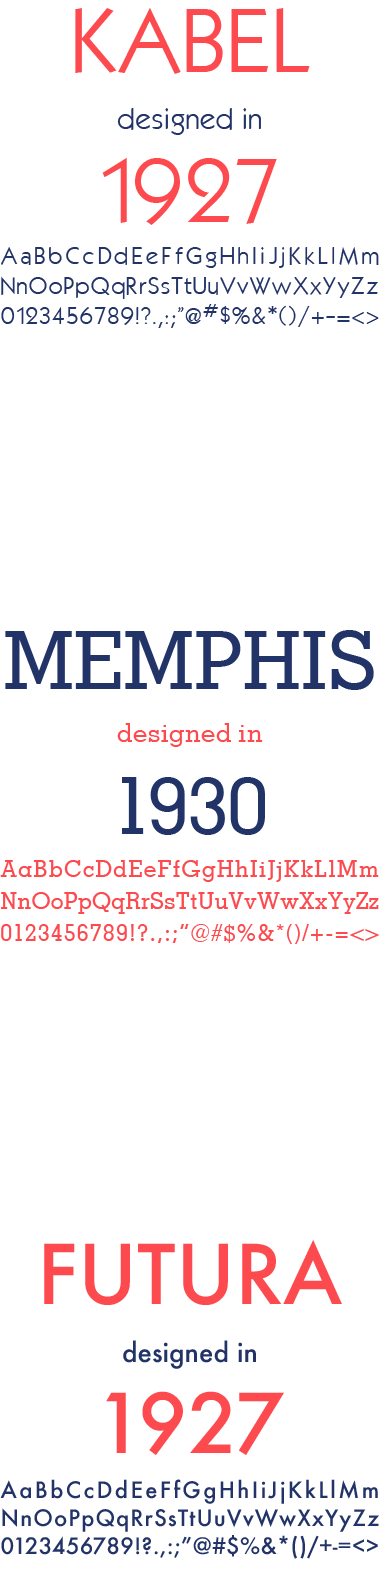 a visual showcase of Kabel, Memphis, and Futura font families